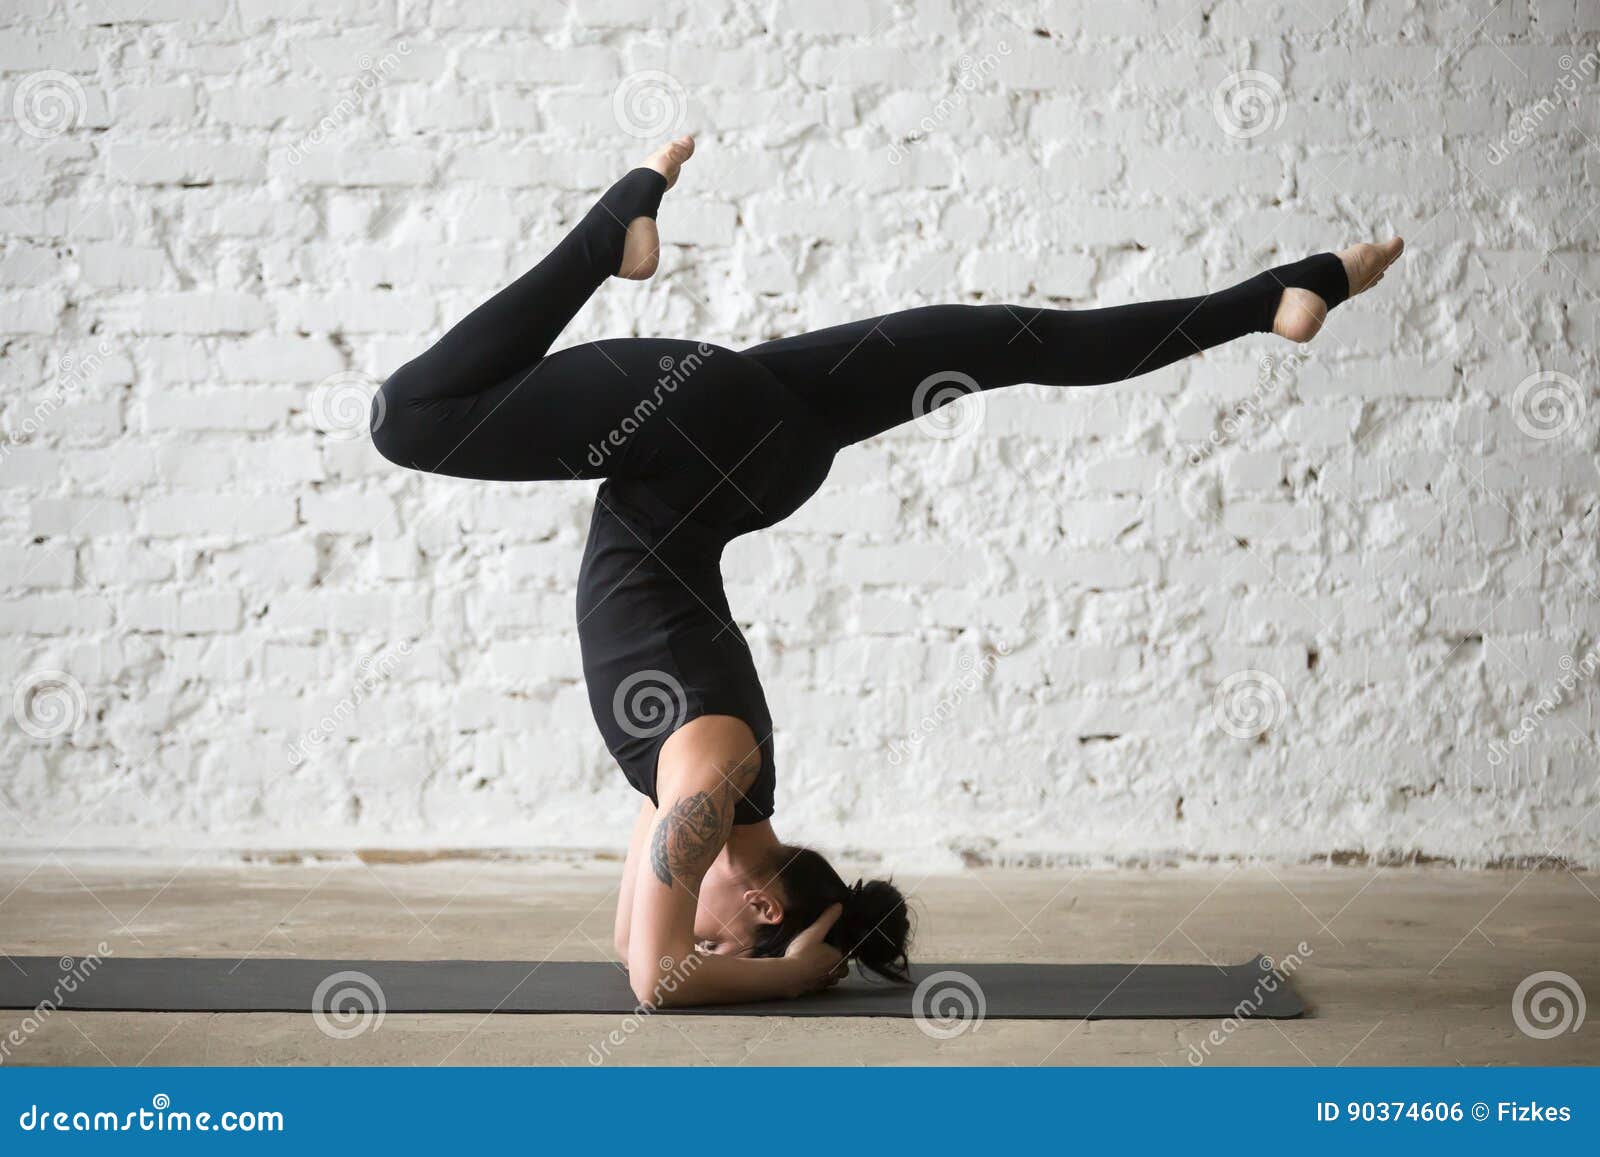 5-Minute Yoga Challenge: How to Practice Half a Headstand - YogaUOnline